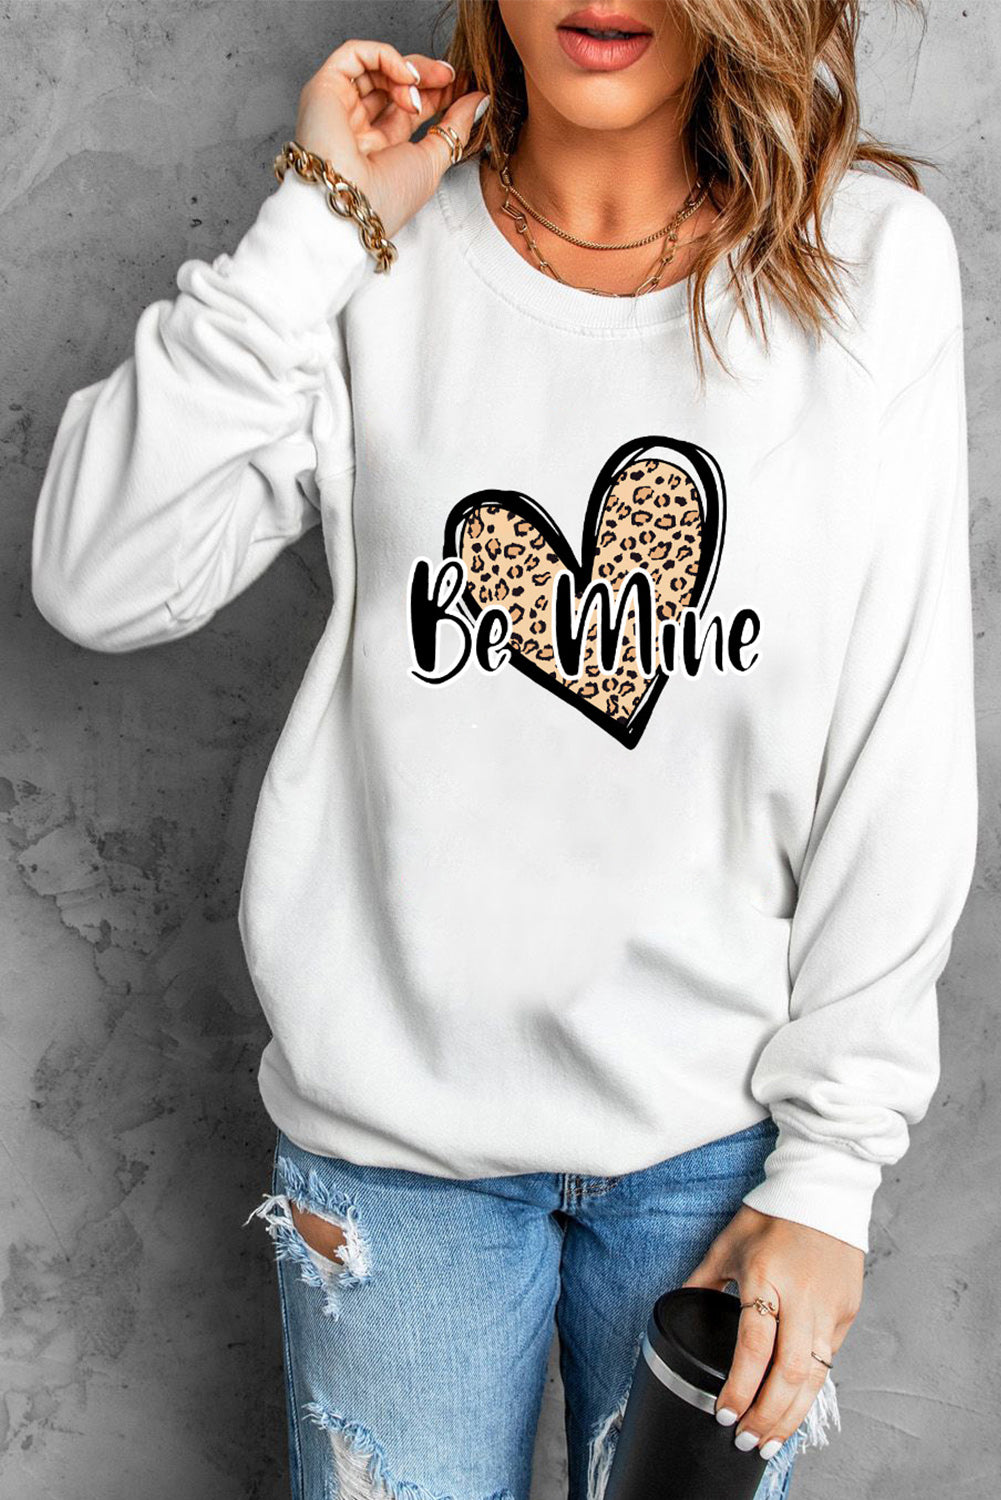 White Be Mine Leopard Heart Print Long Sleeve Pullover Sweatshirt